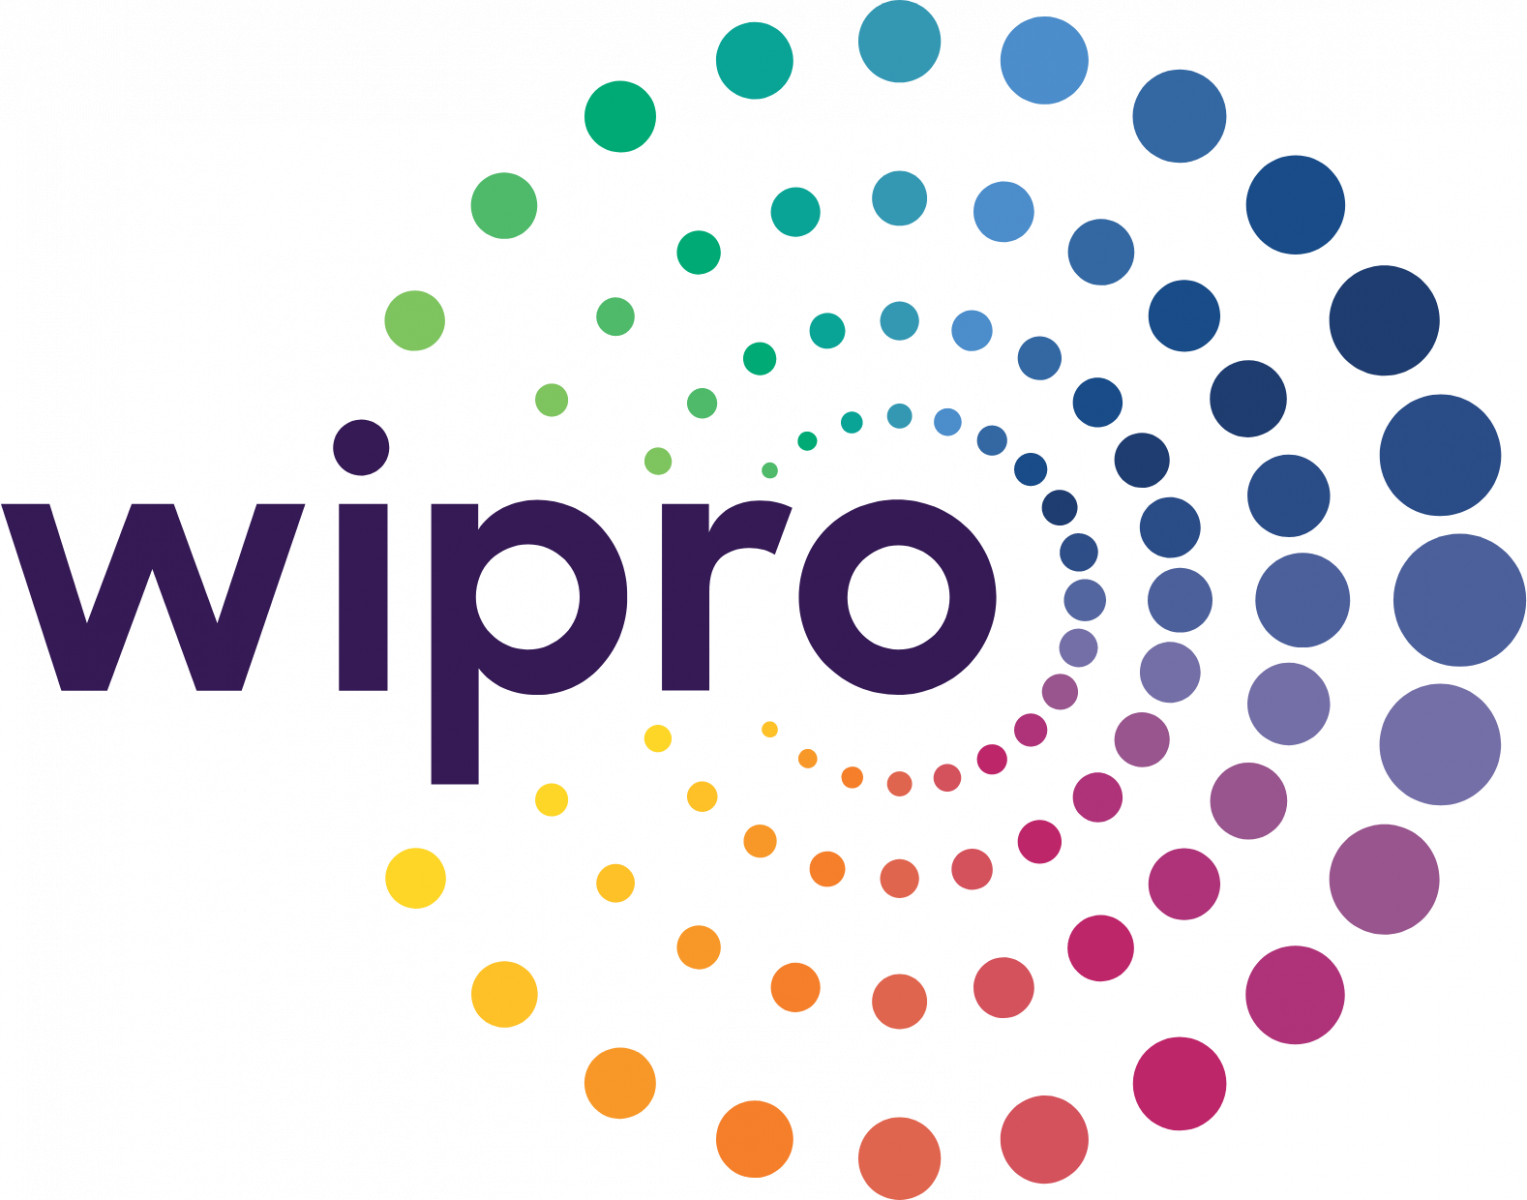 Wipro it companies in New York